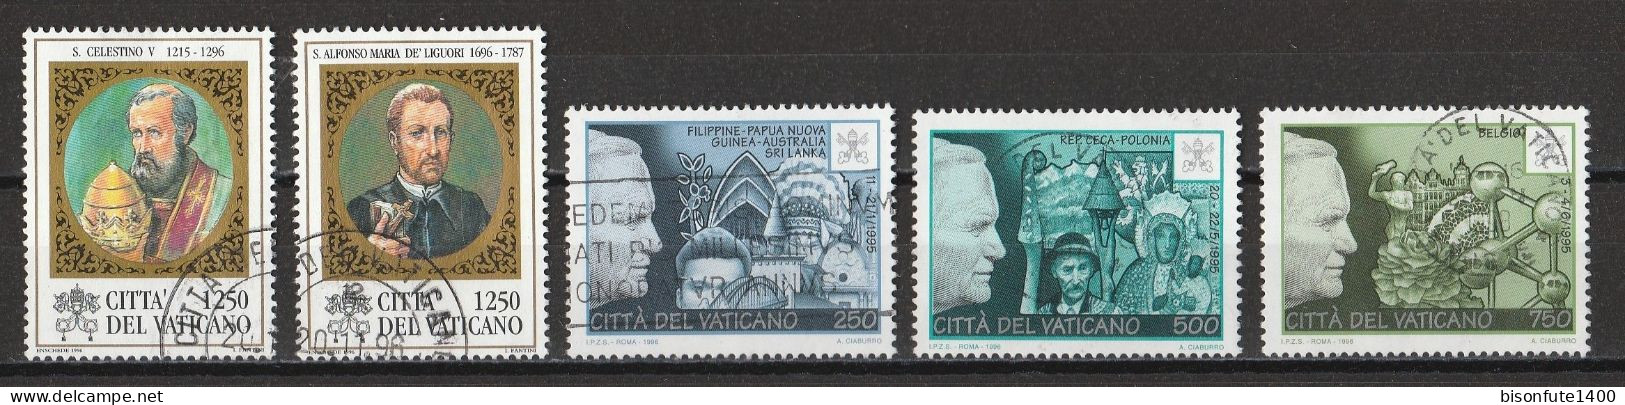 Vatican 1996 : Timbres Yvert & Tellier N° 1050 - 1051 - 1052 - 1053 - 1054 - 1057 Et 1058 Oblitérés - Usati